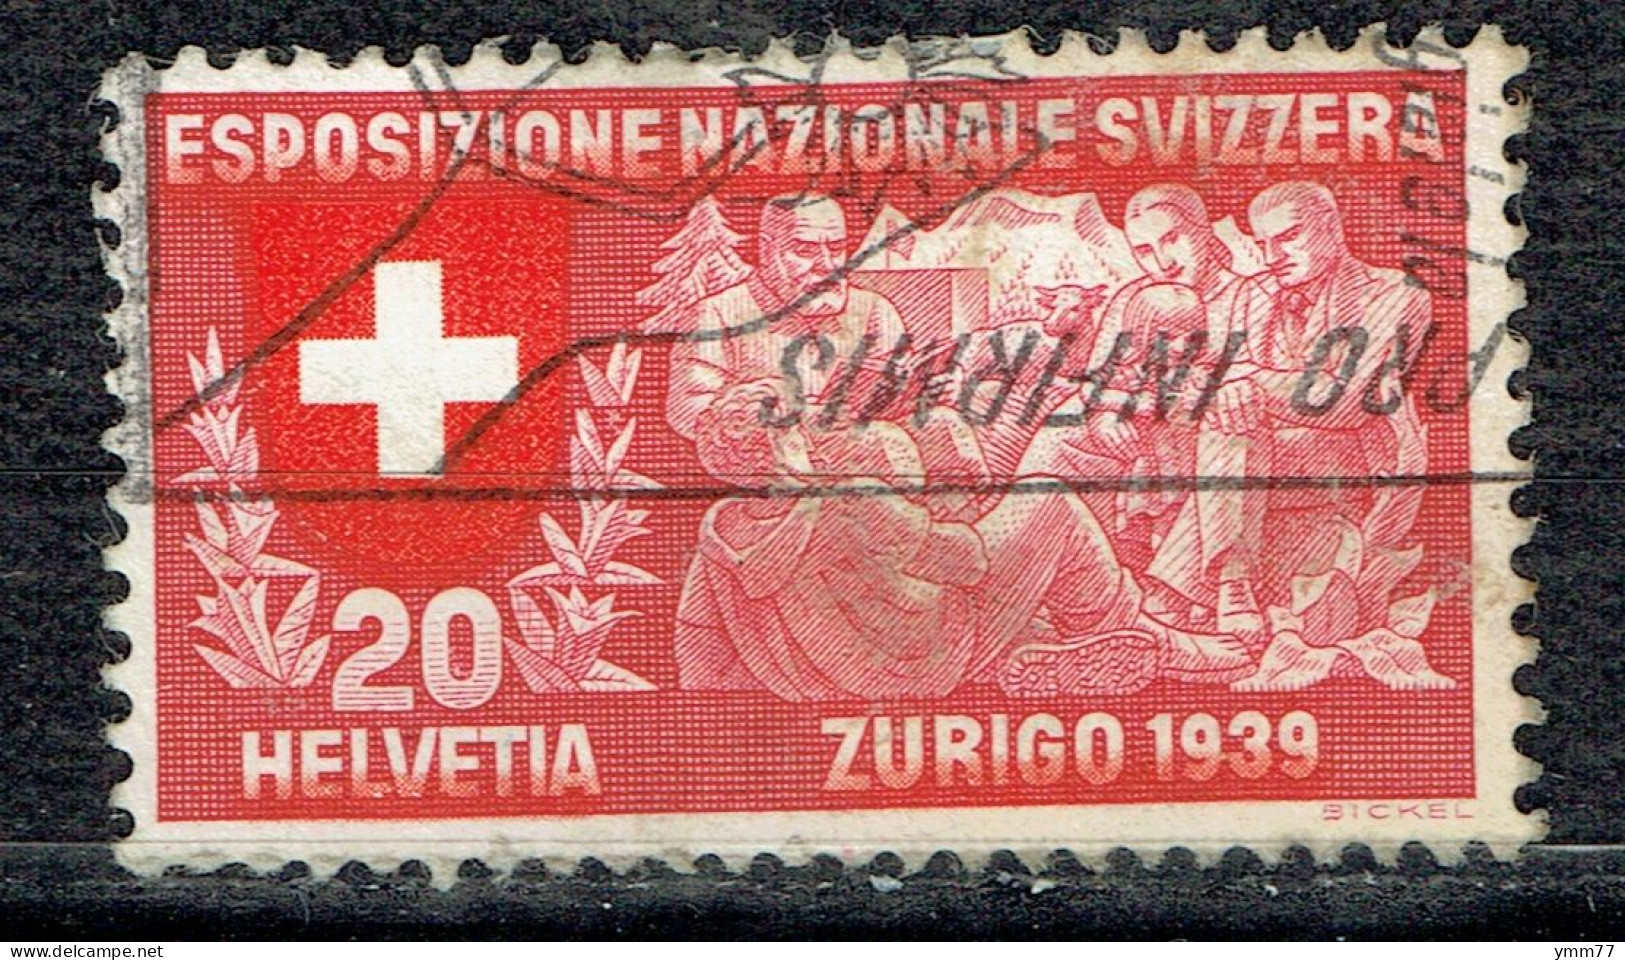 Exposition Nationale De Zurich : Allégorie De L'effort Spirituel Du Peuple Suisse (en Italien) - Used Stamps